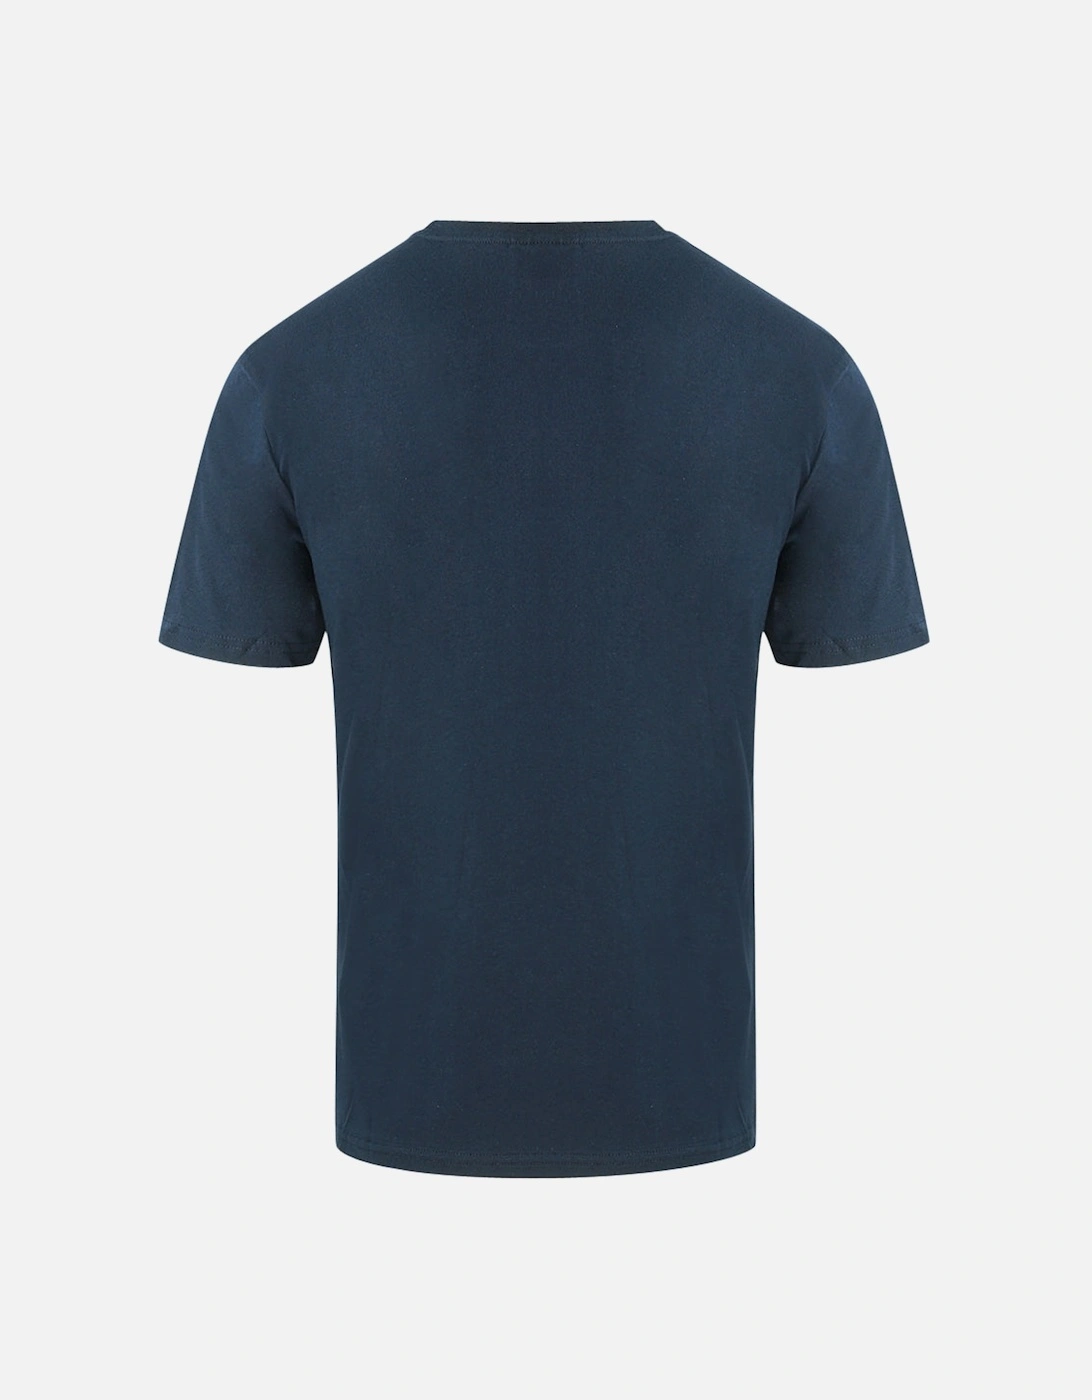 Circle Logo Navy Blue T-Shirt